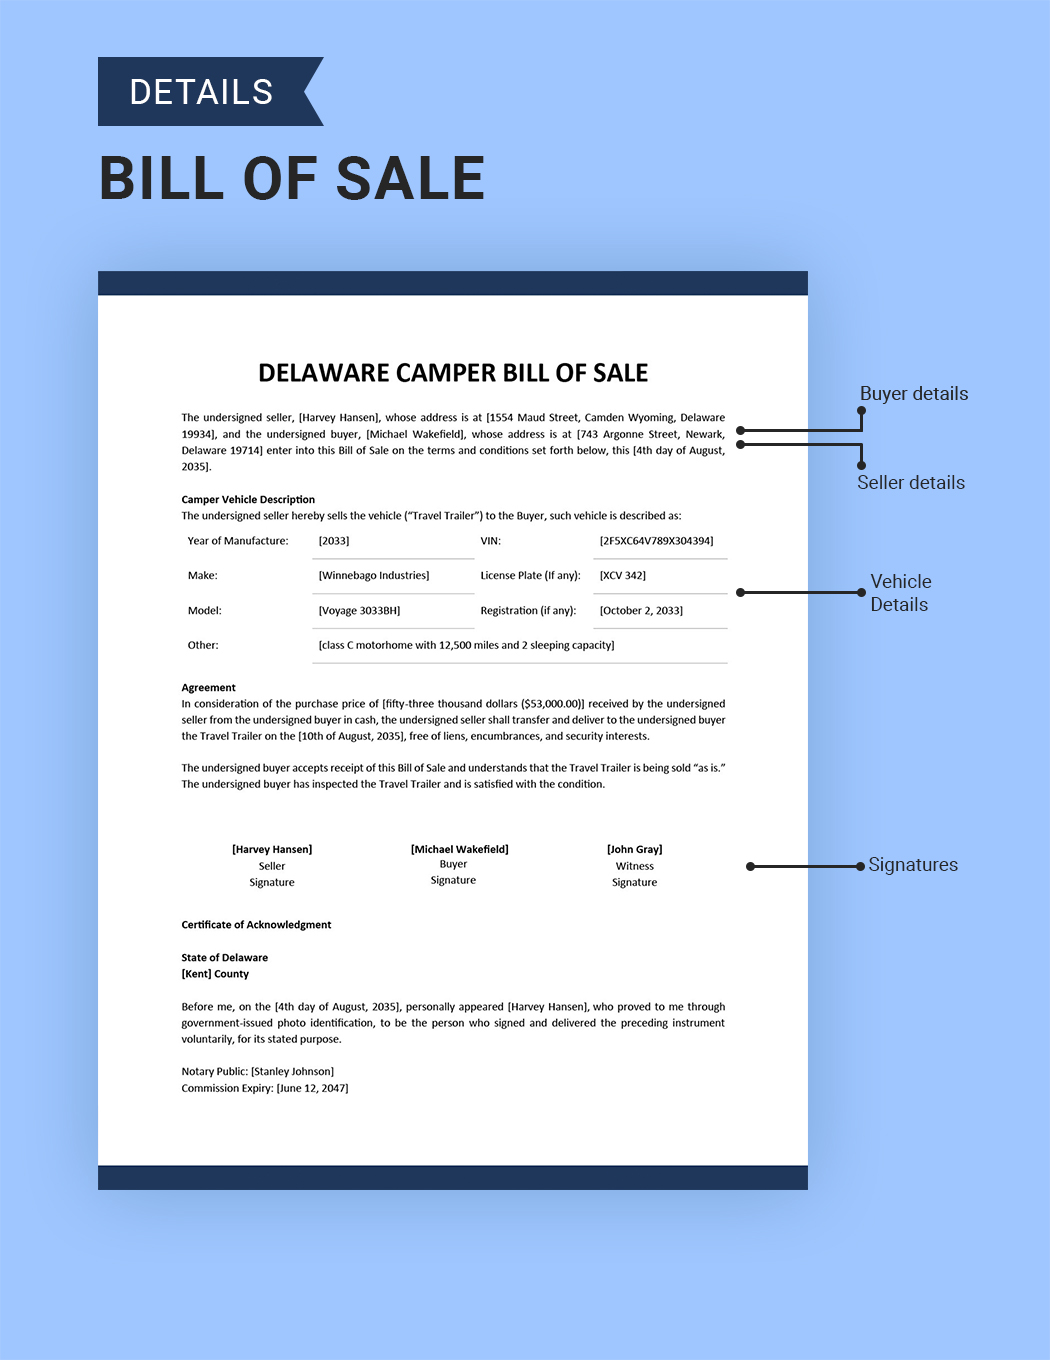 Delaware Camper Bill of Sale Template